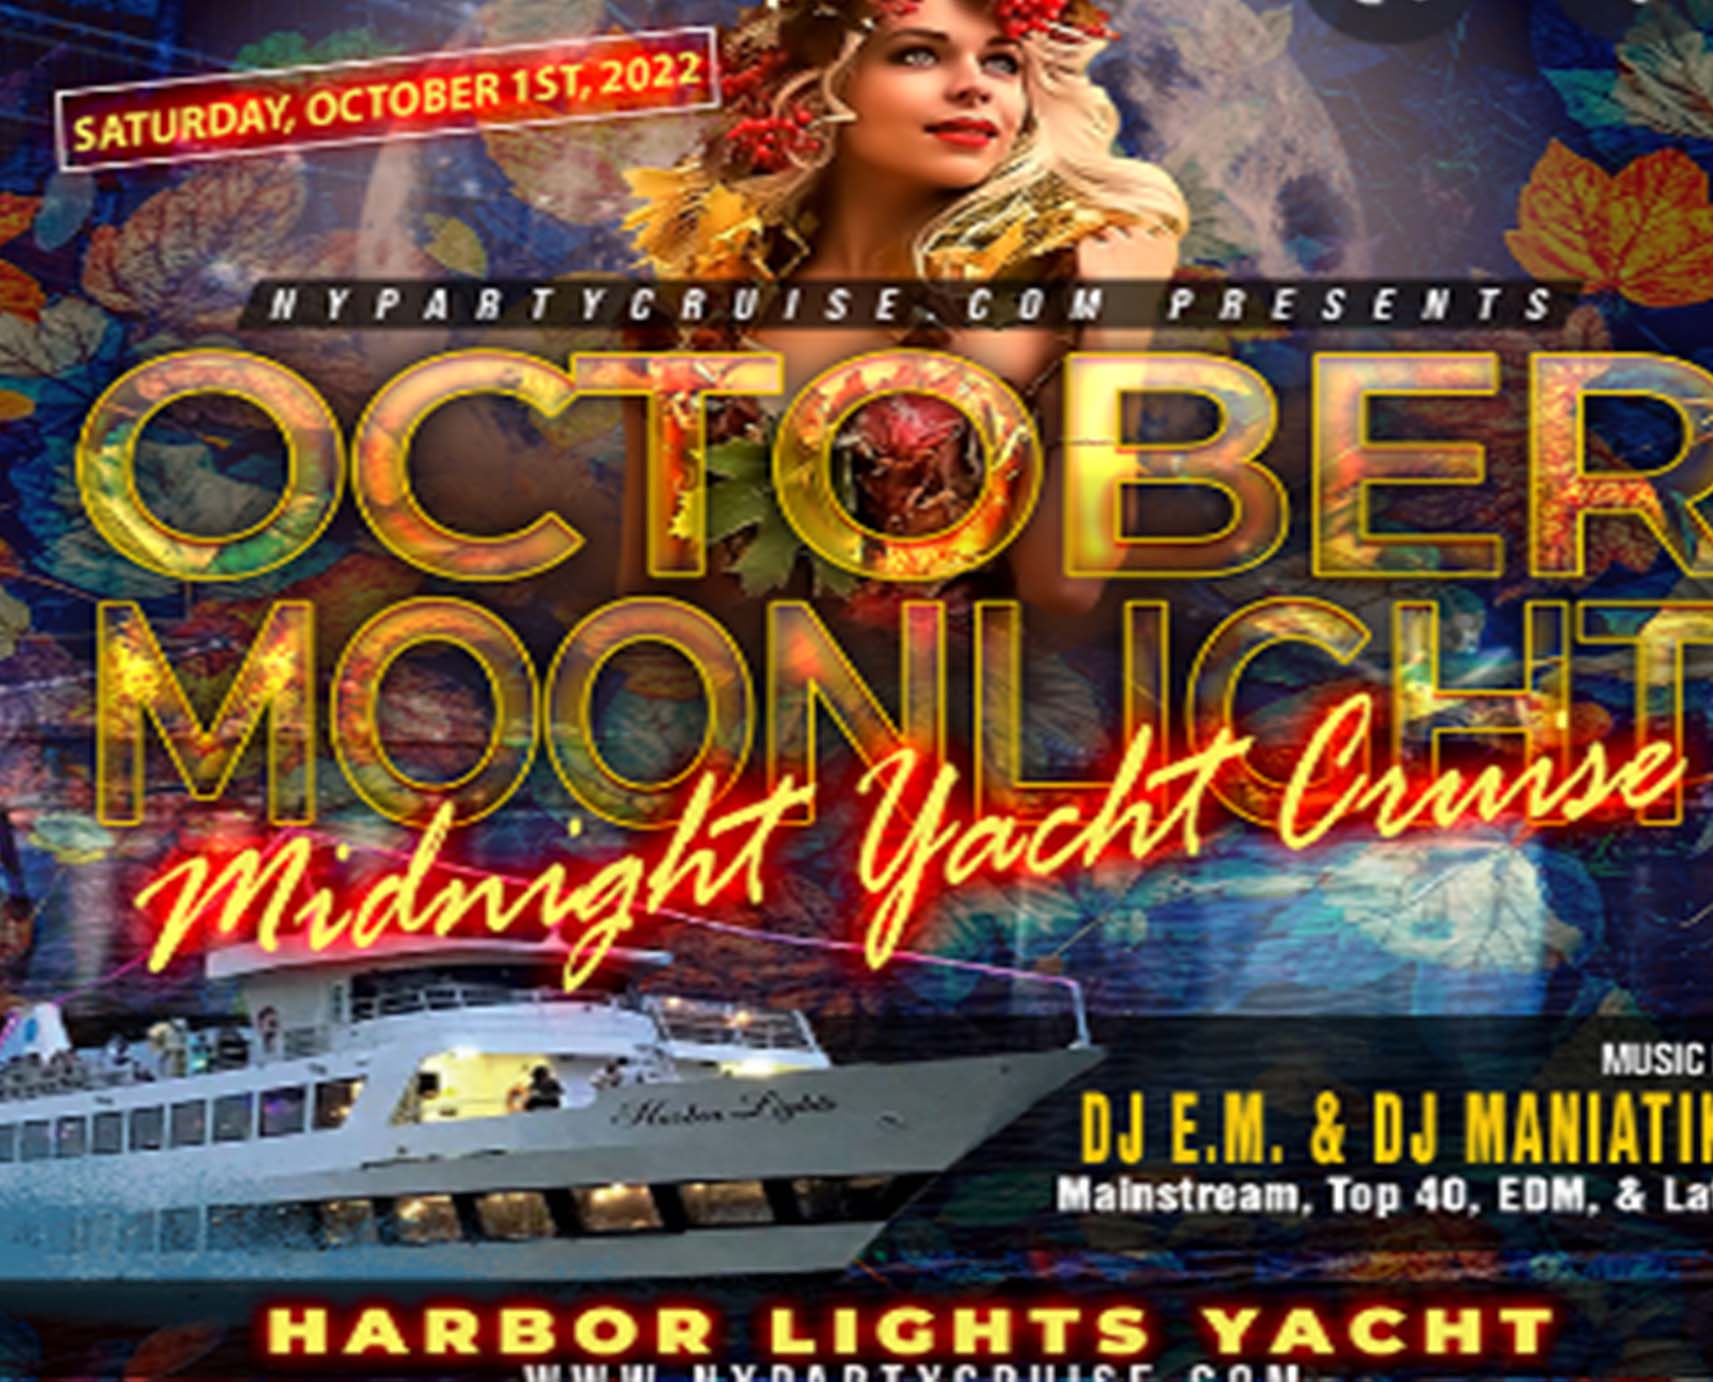 The October Moonlight Midnight Yacht Cruise